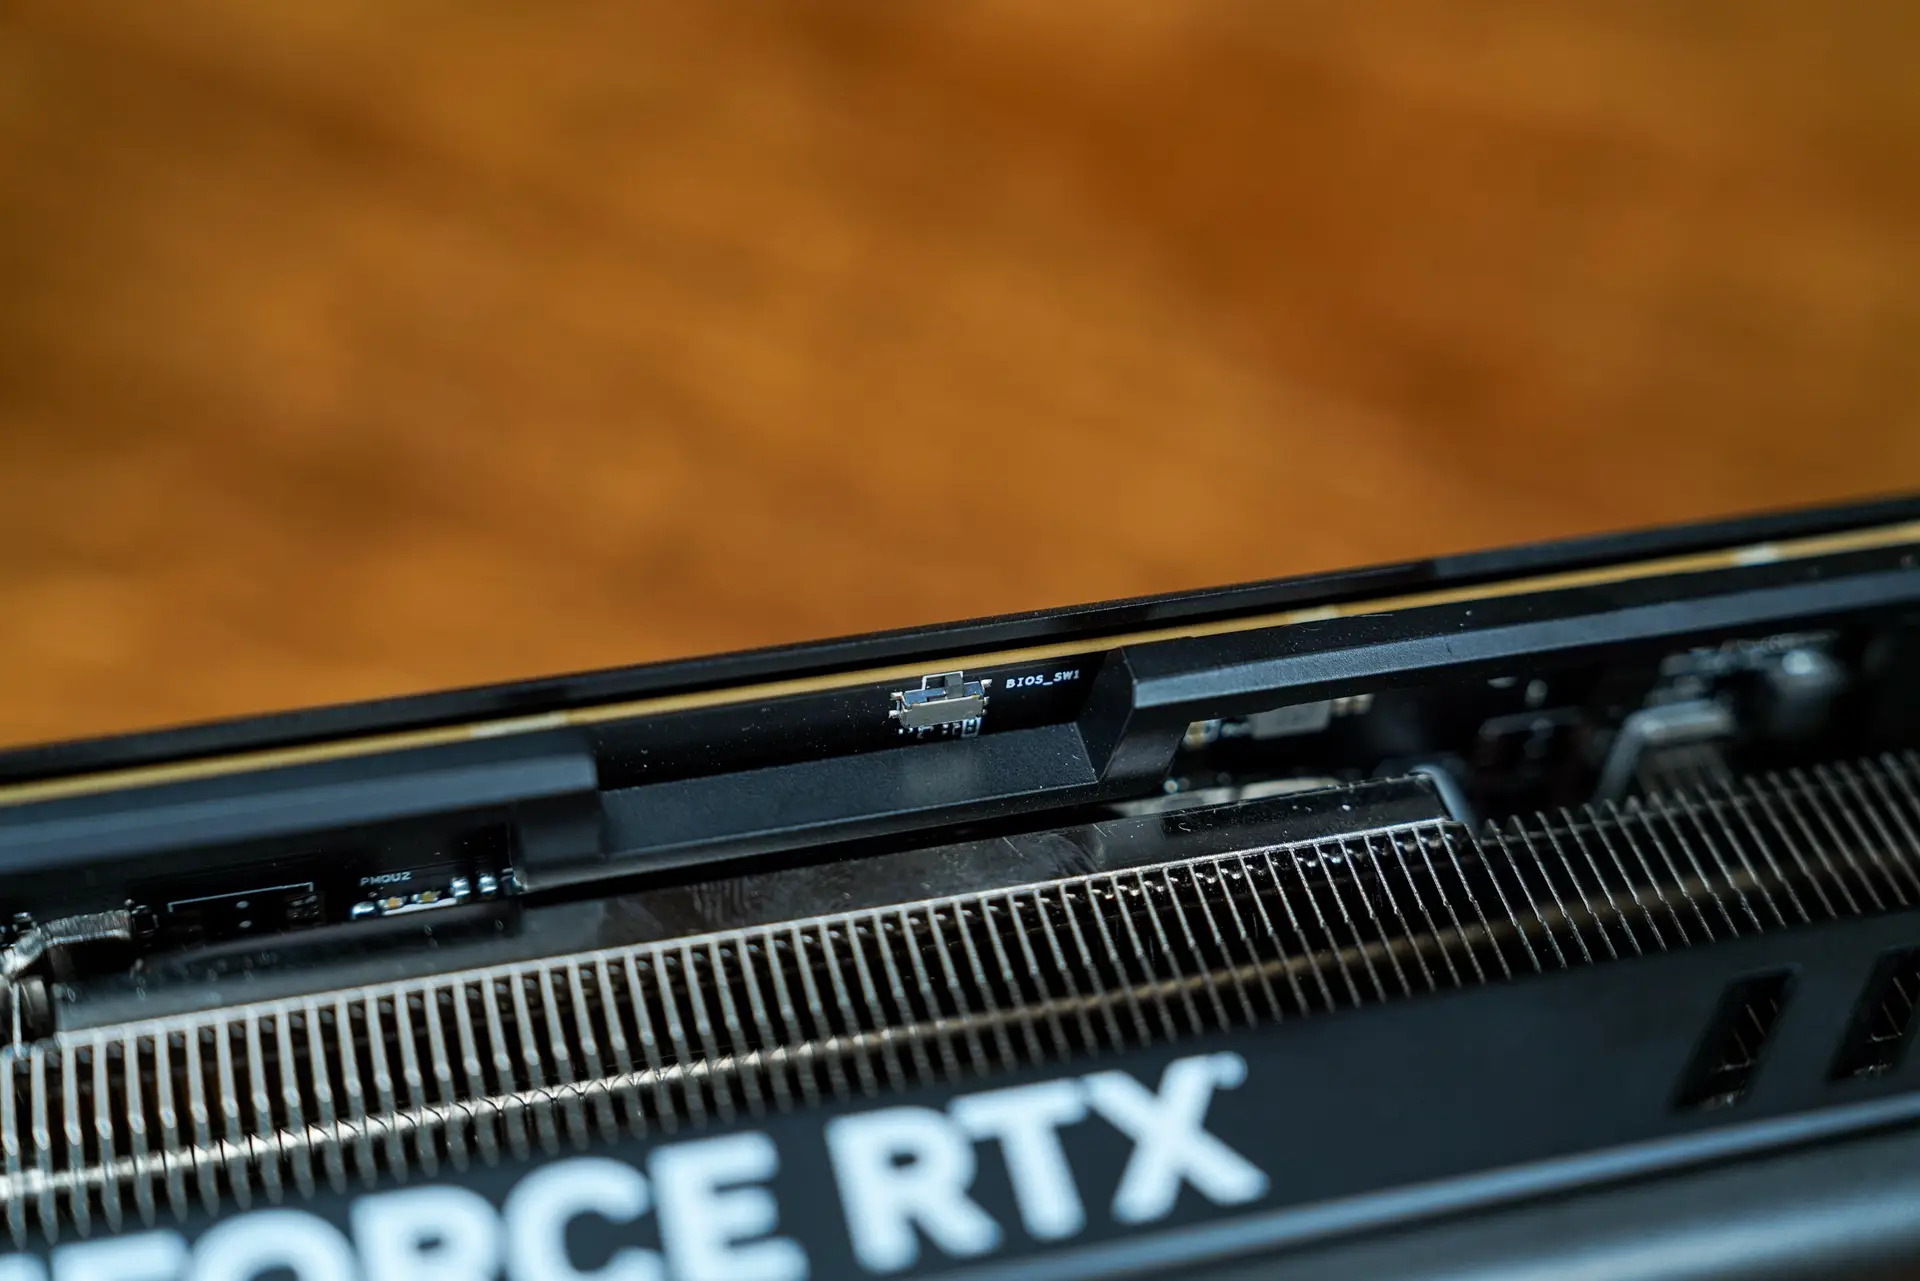 tridentx ddr3 揭秘TridentX DDR3内存：性能超群，频率时序双杀  第8张